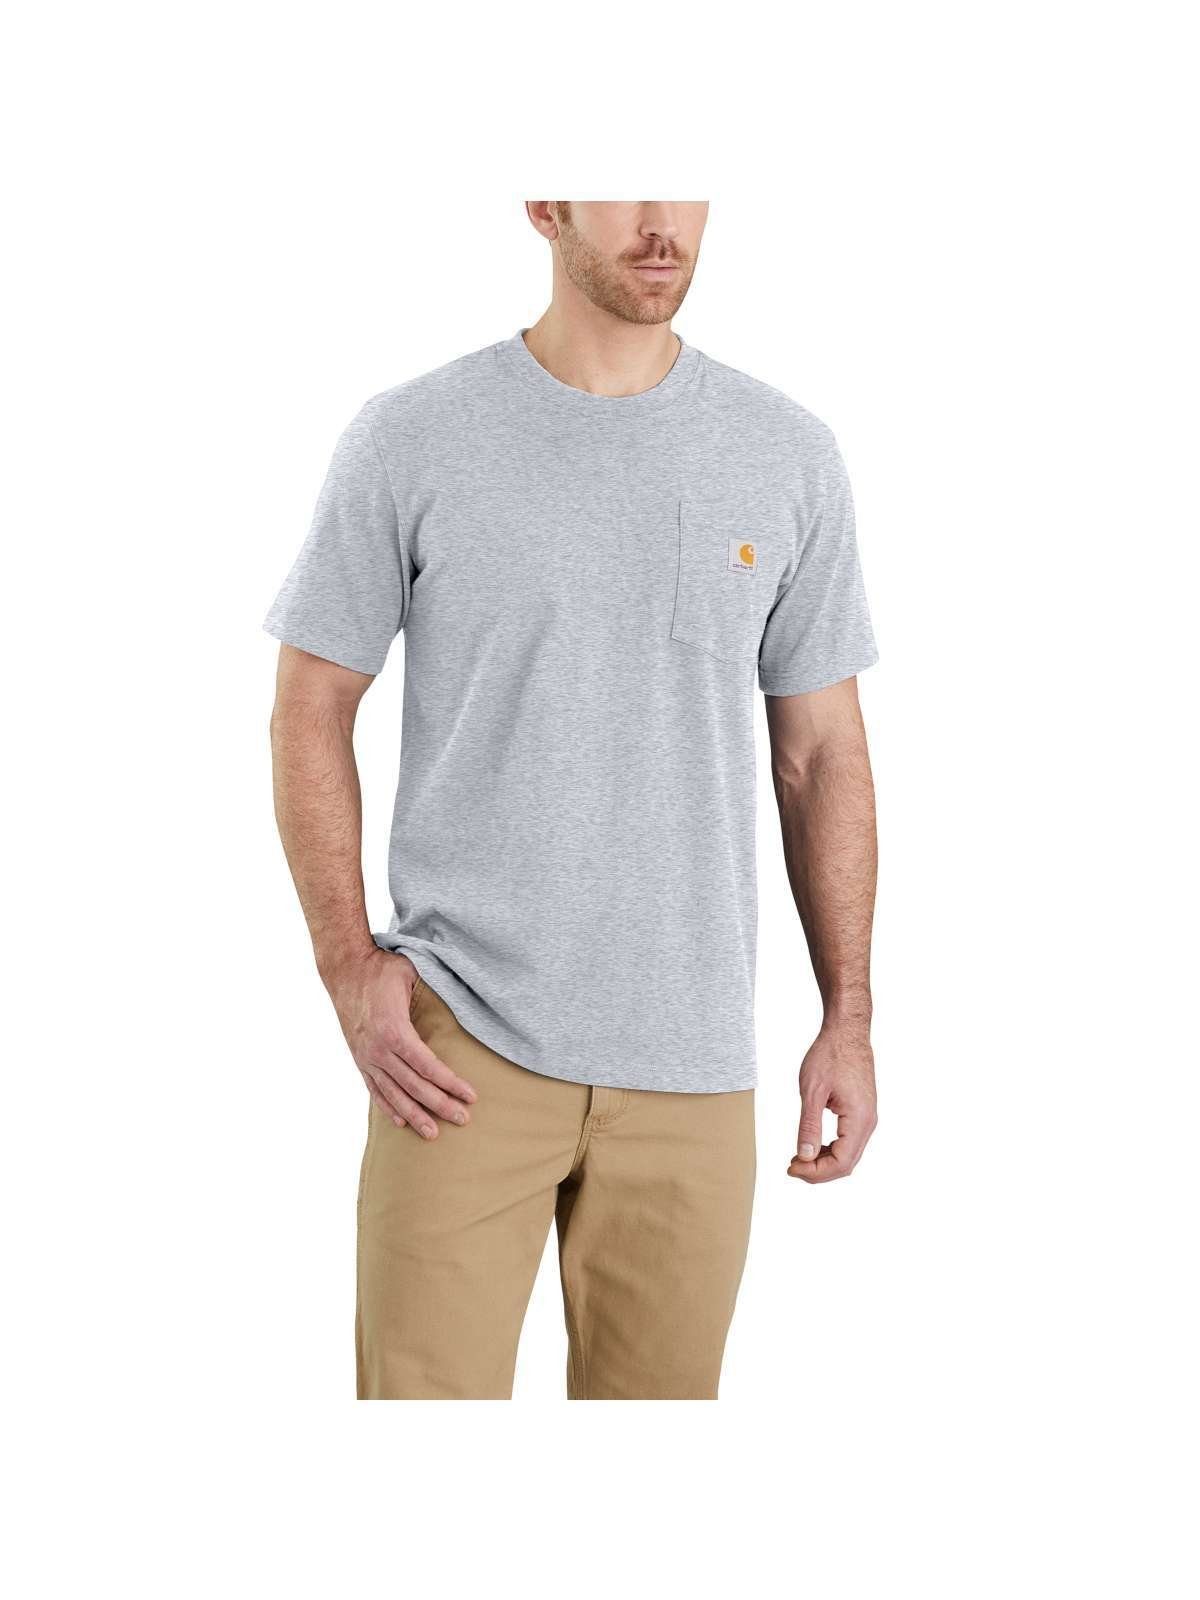 Carhartt HEATHER Carhartt T-Shirt GREY T-Shirt grau